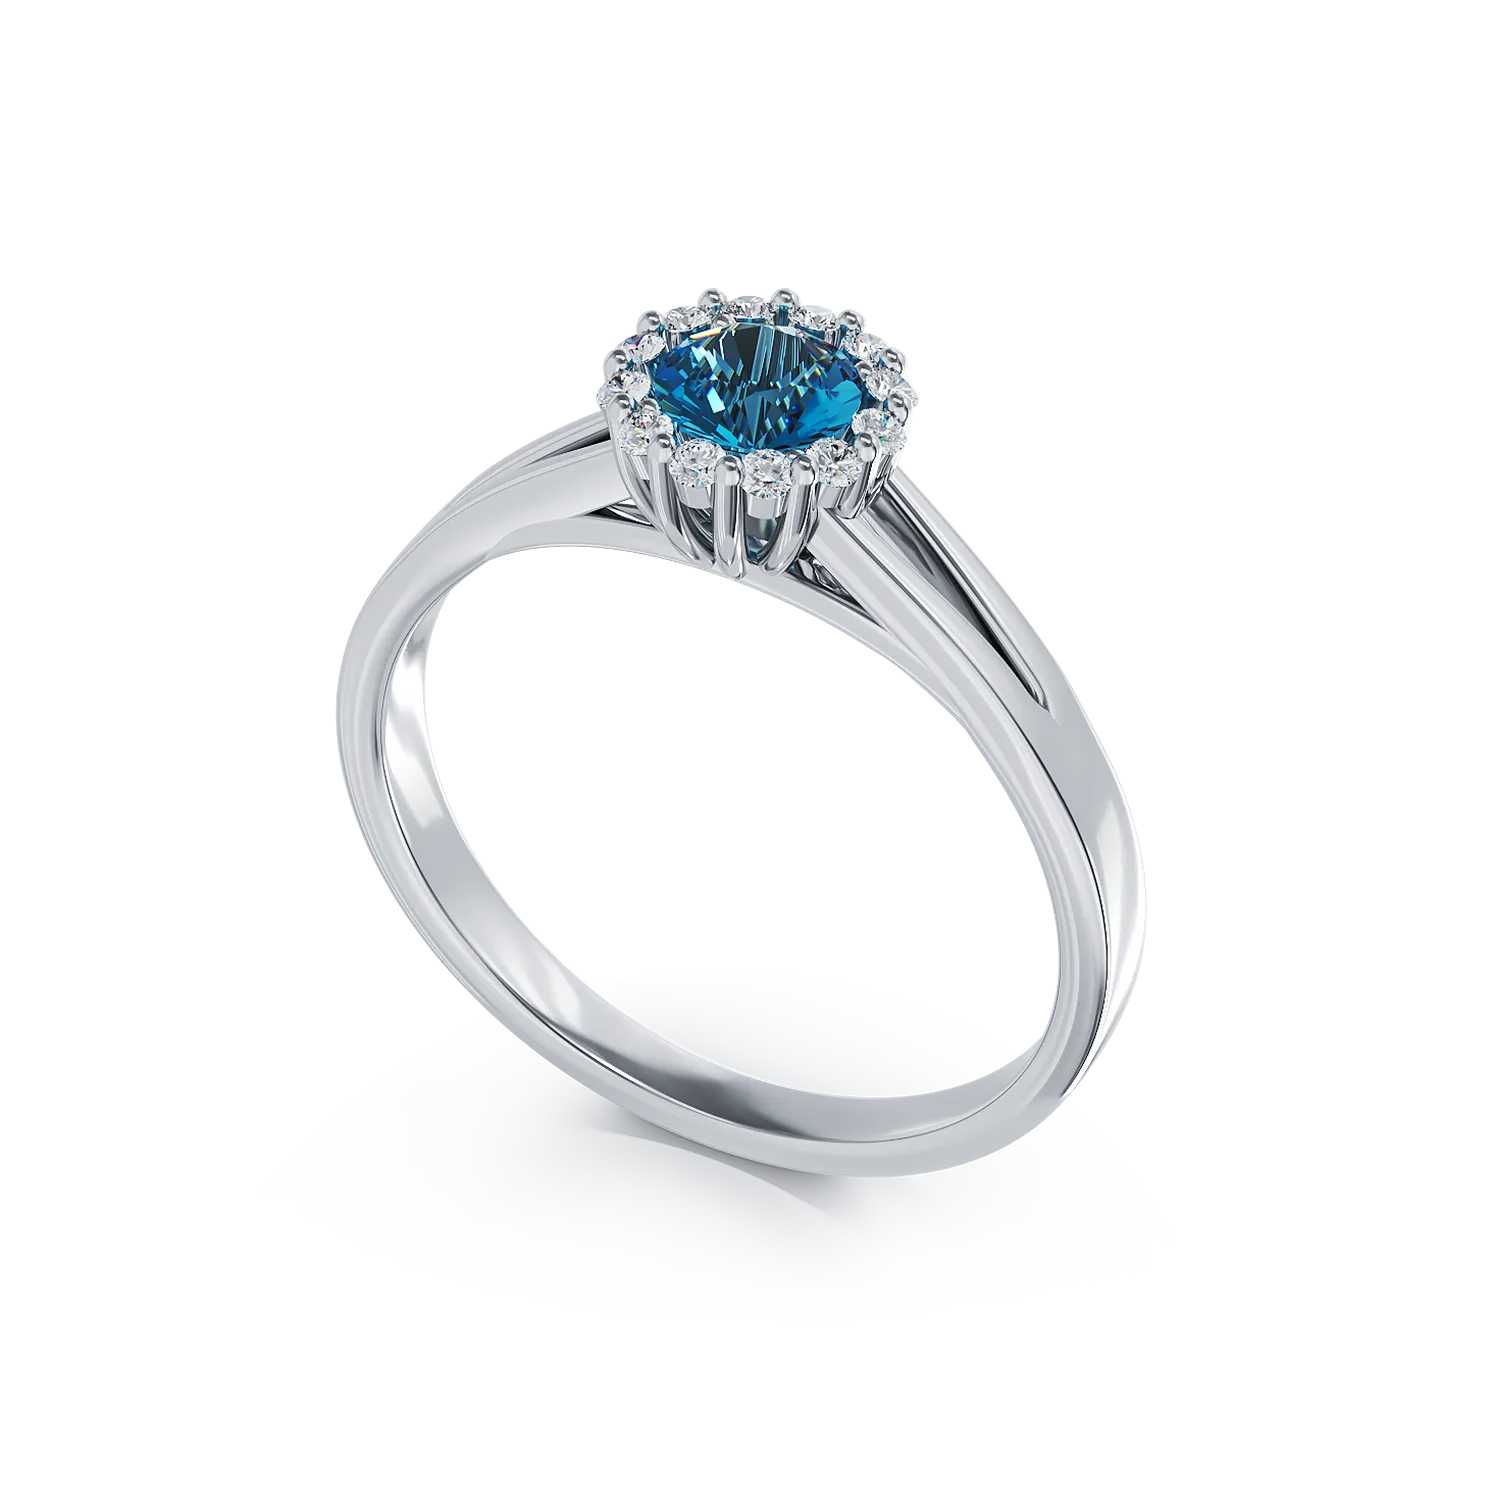 Inel de logodna din aur alb de 18K cu diamant albastru de 0.22ct si diamante de 0.1ct